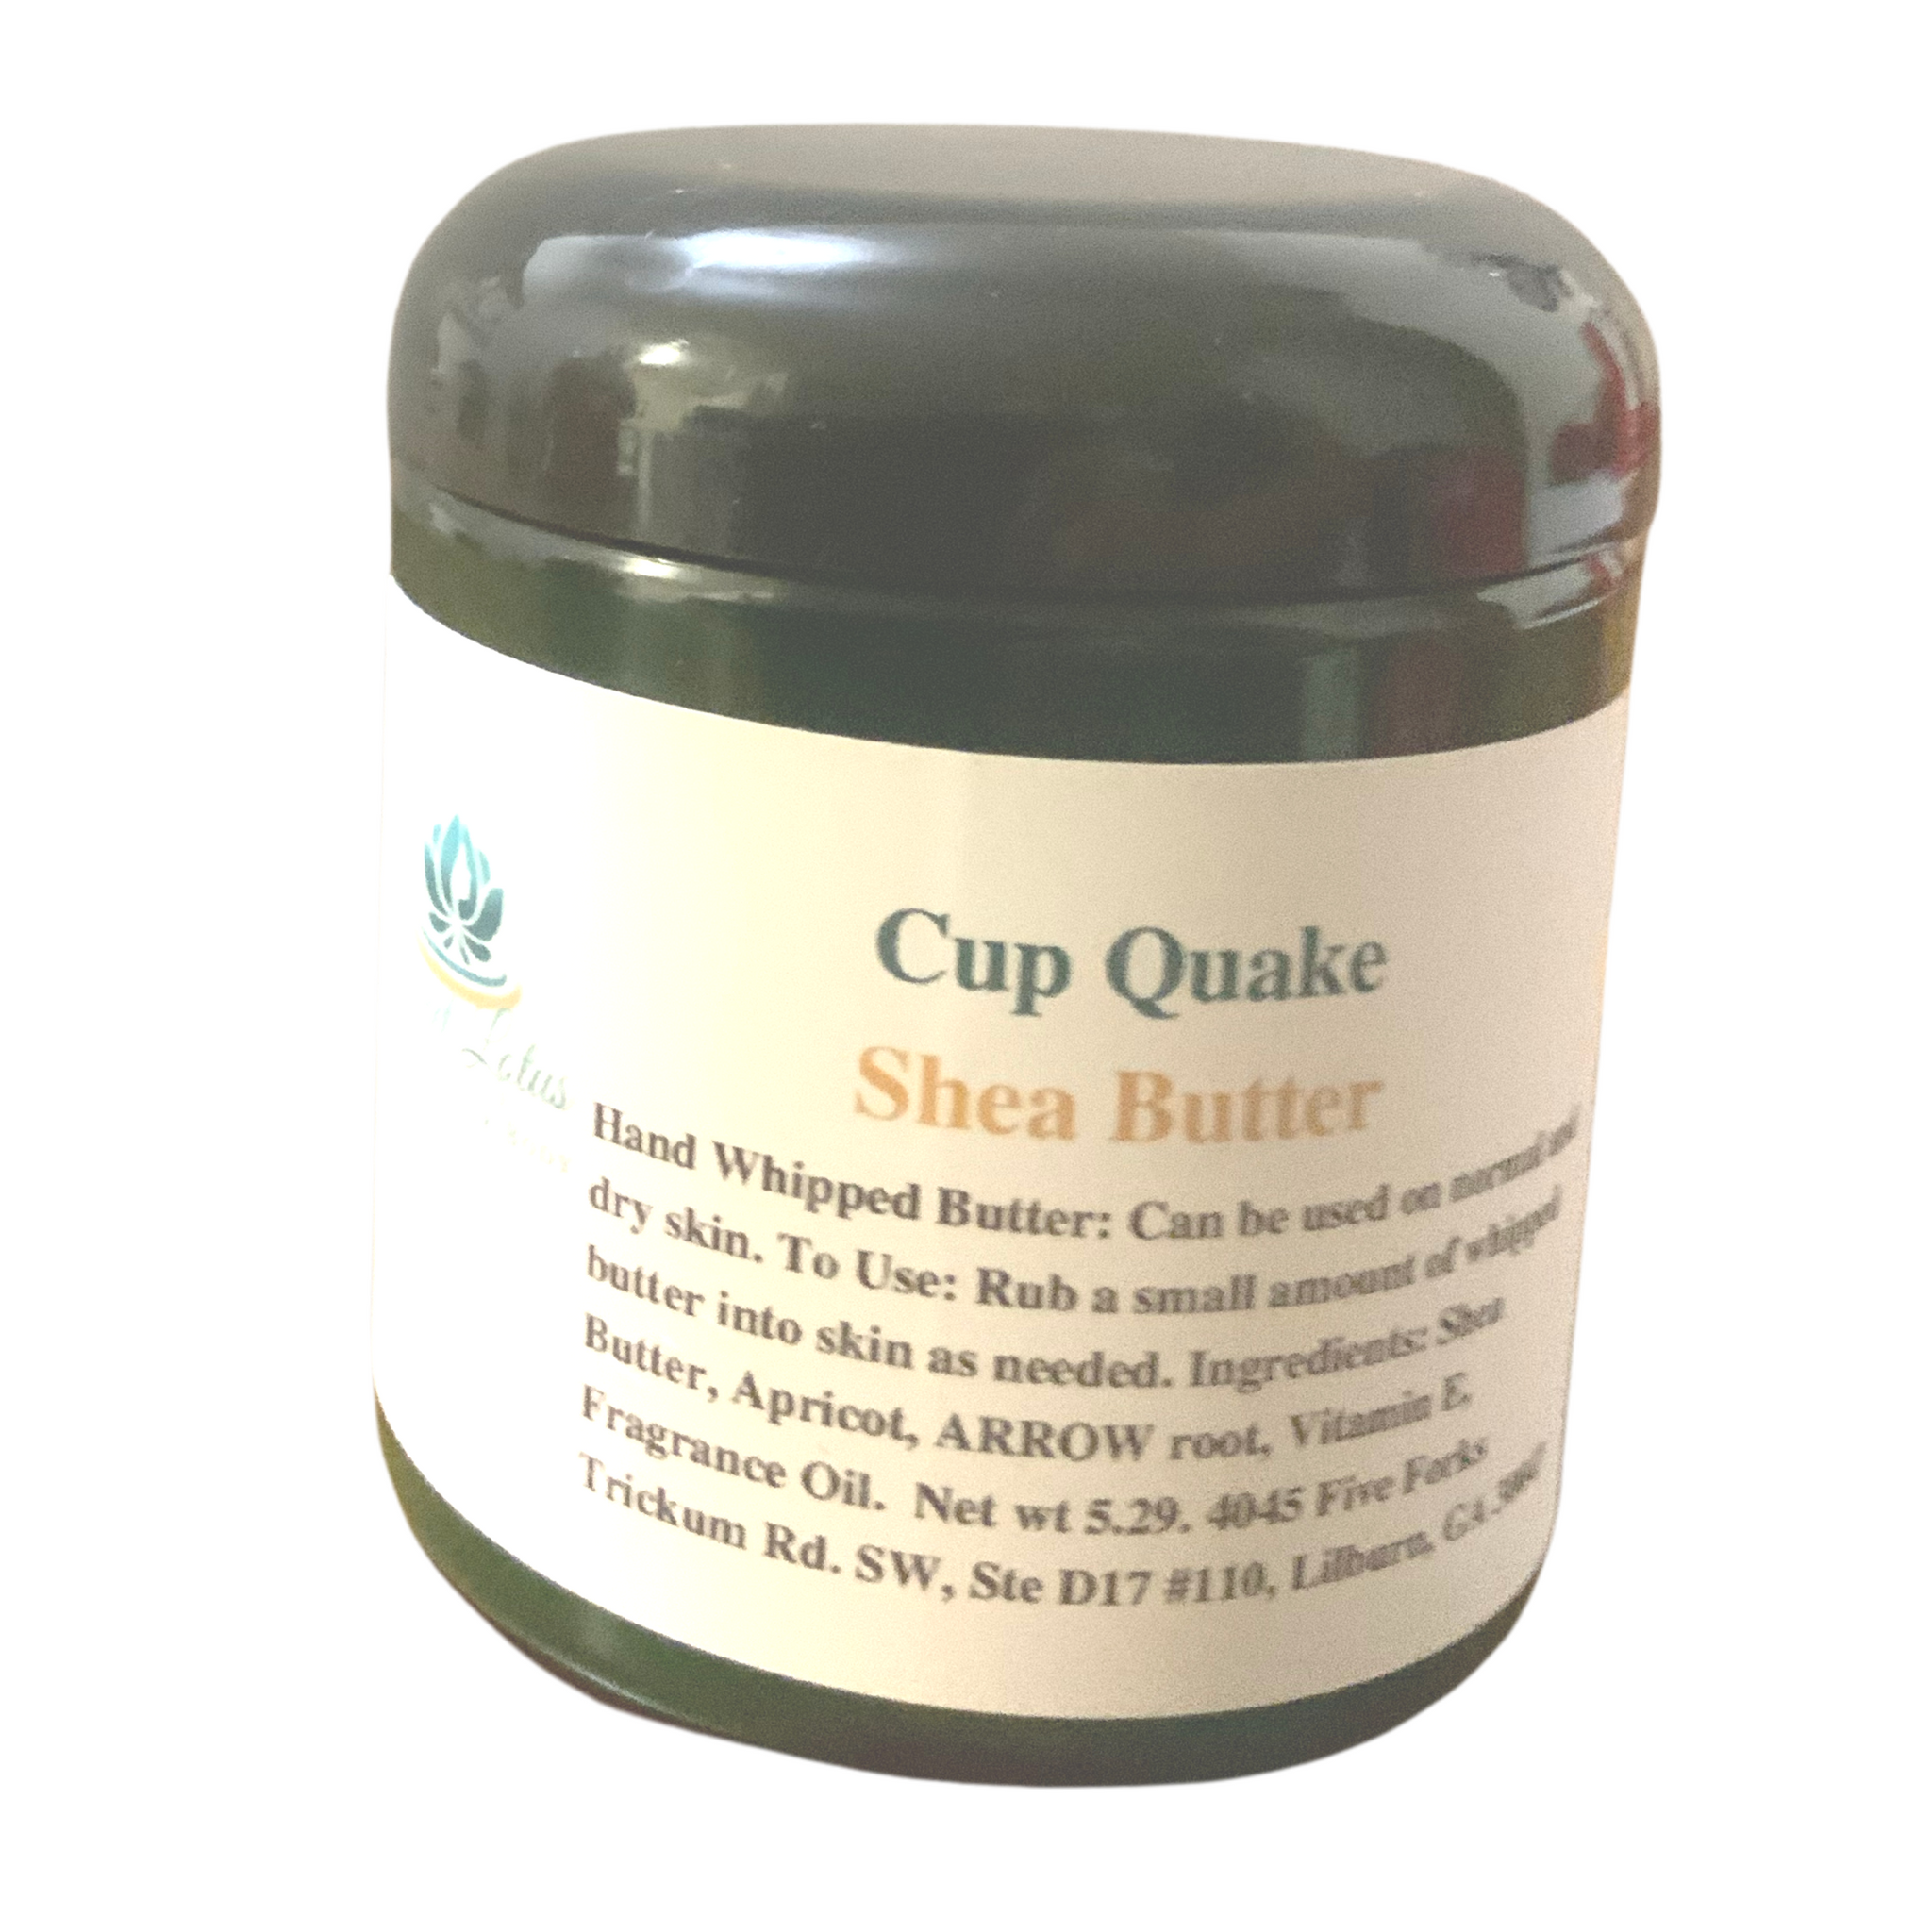 Cup Quake Shea Butter